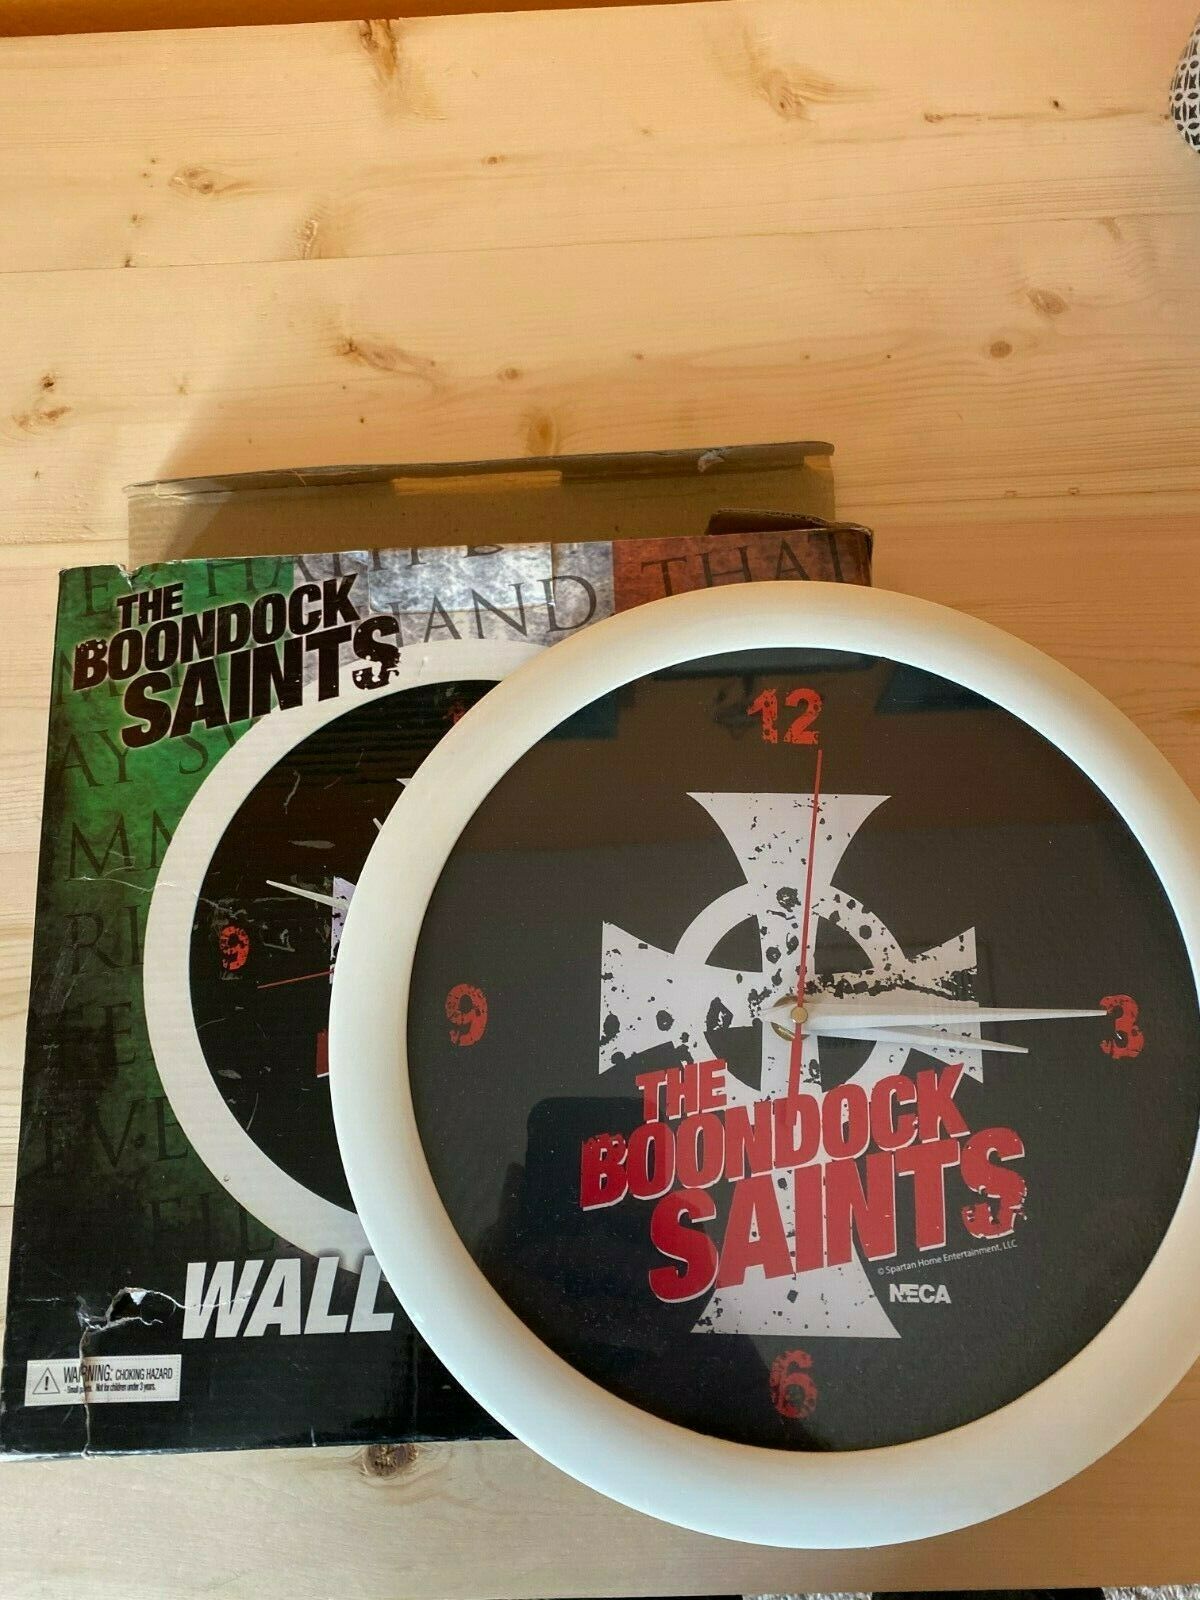 Neca Boondock Saints Wall Clock Mib Perfect Condition!! Collectible!!